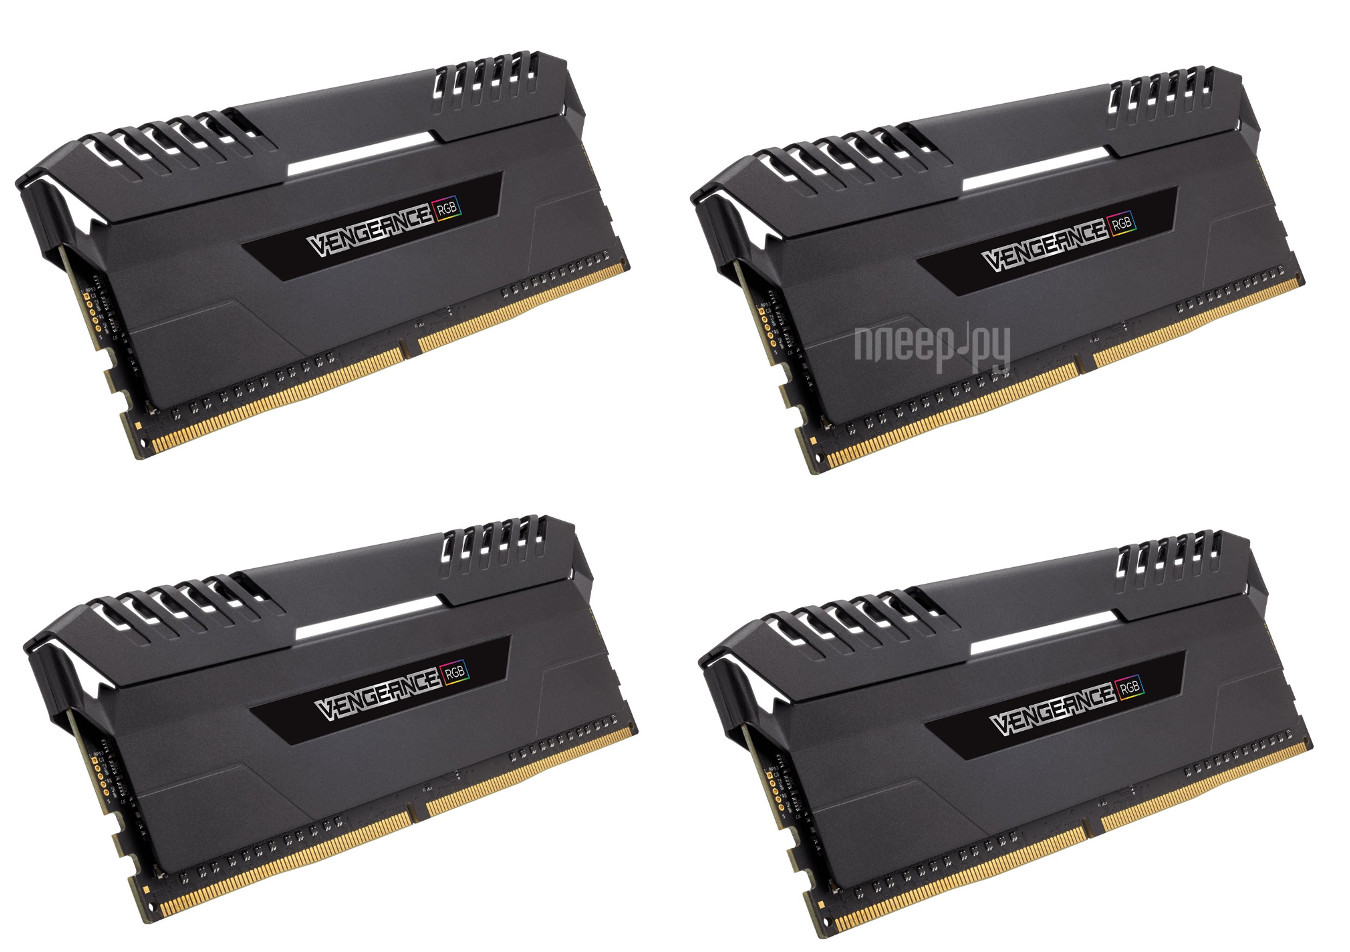   Corsair Vengeance RGB DDR4 DIMM 3466MHz PC4-27700 CL16 - 32Gb KIT (4x8Gb) CMR32GX4M4C3466C16